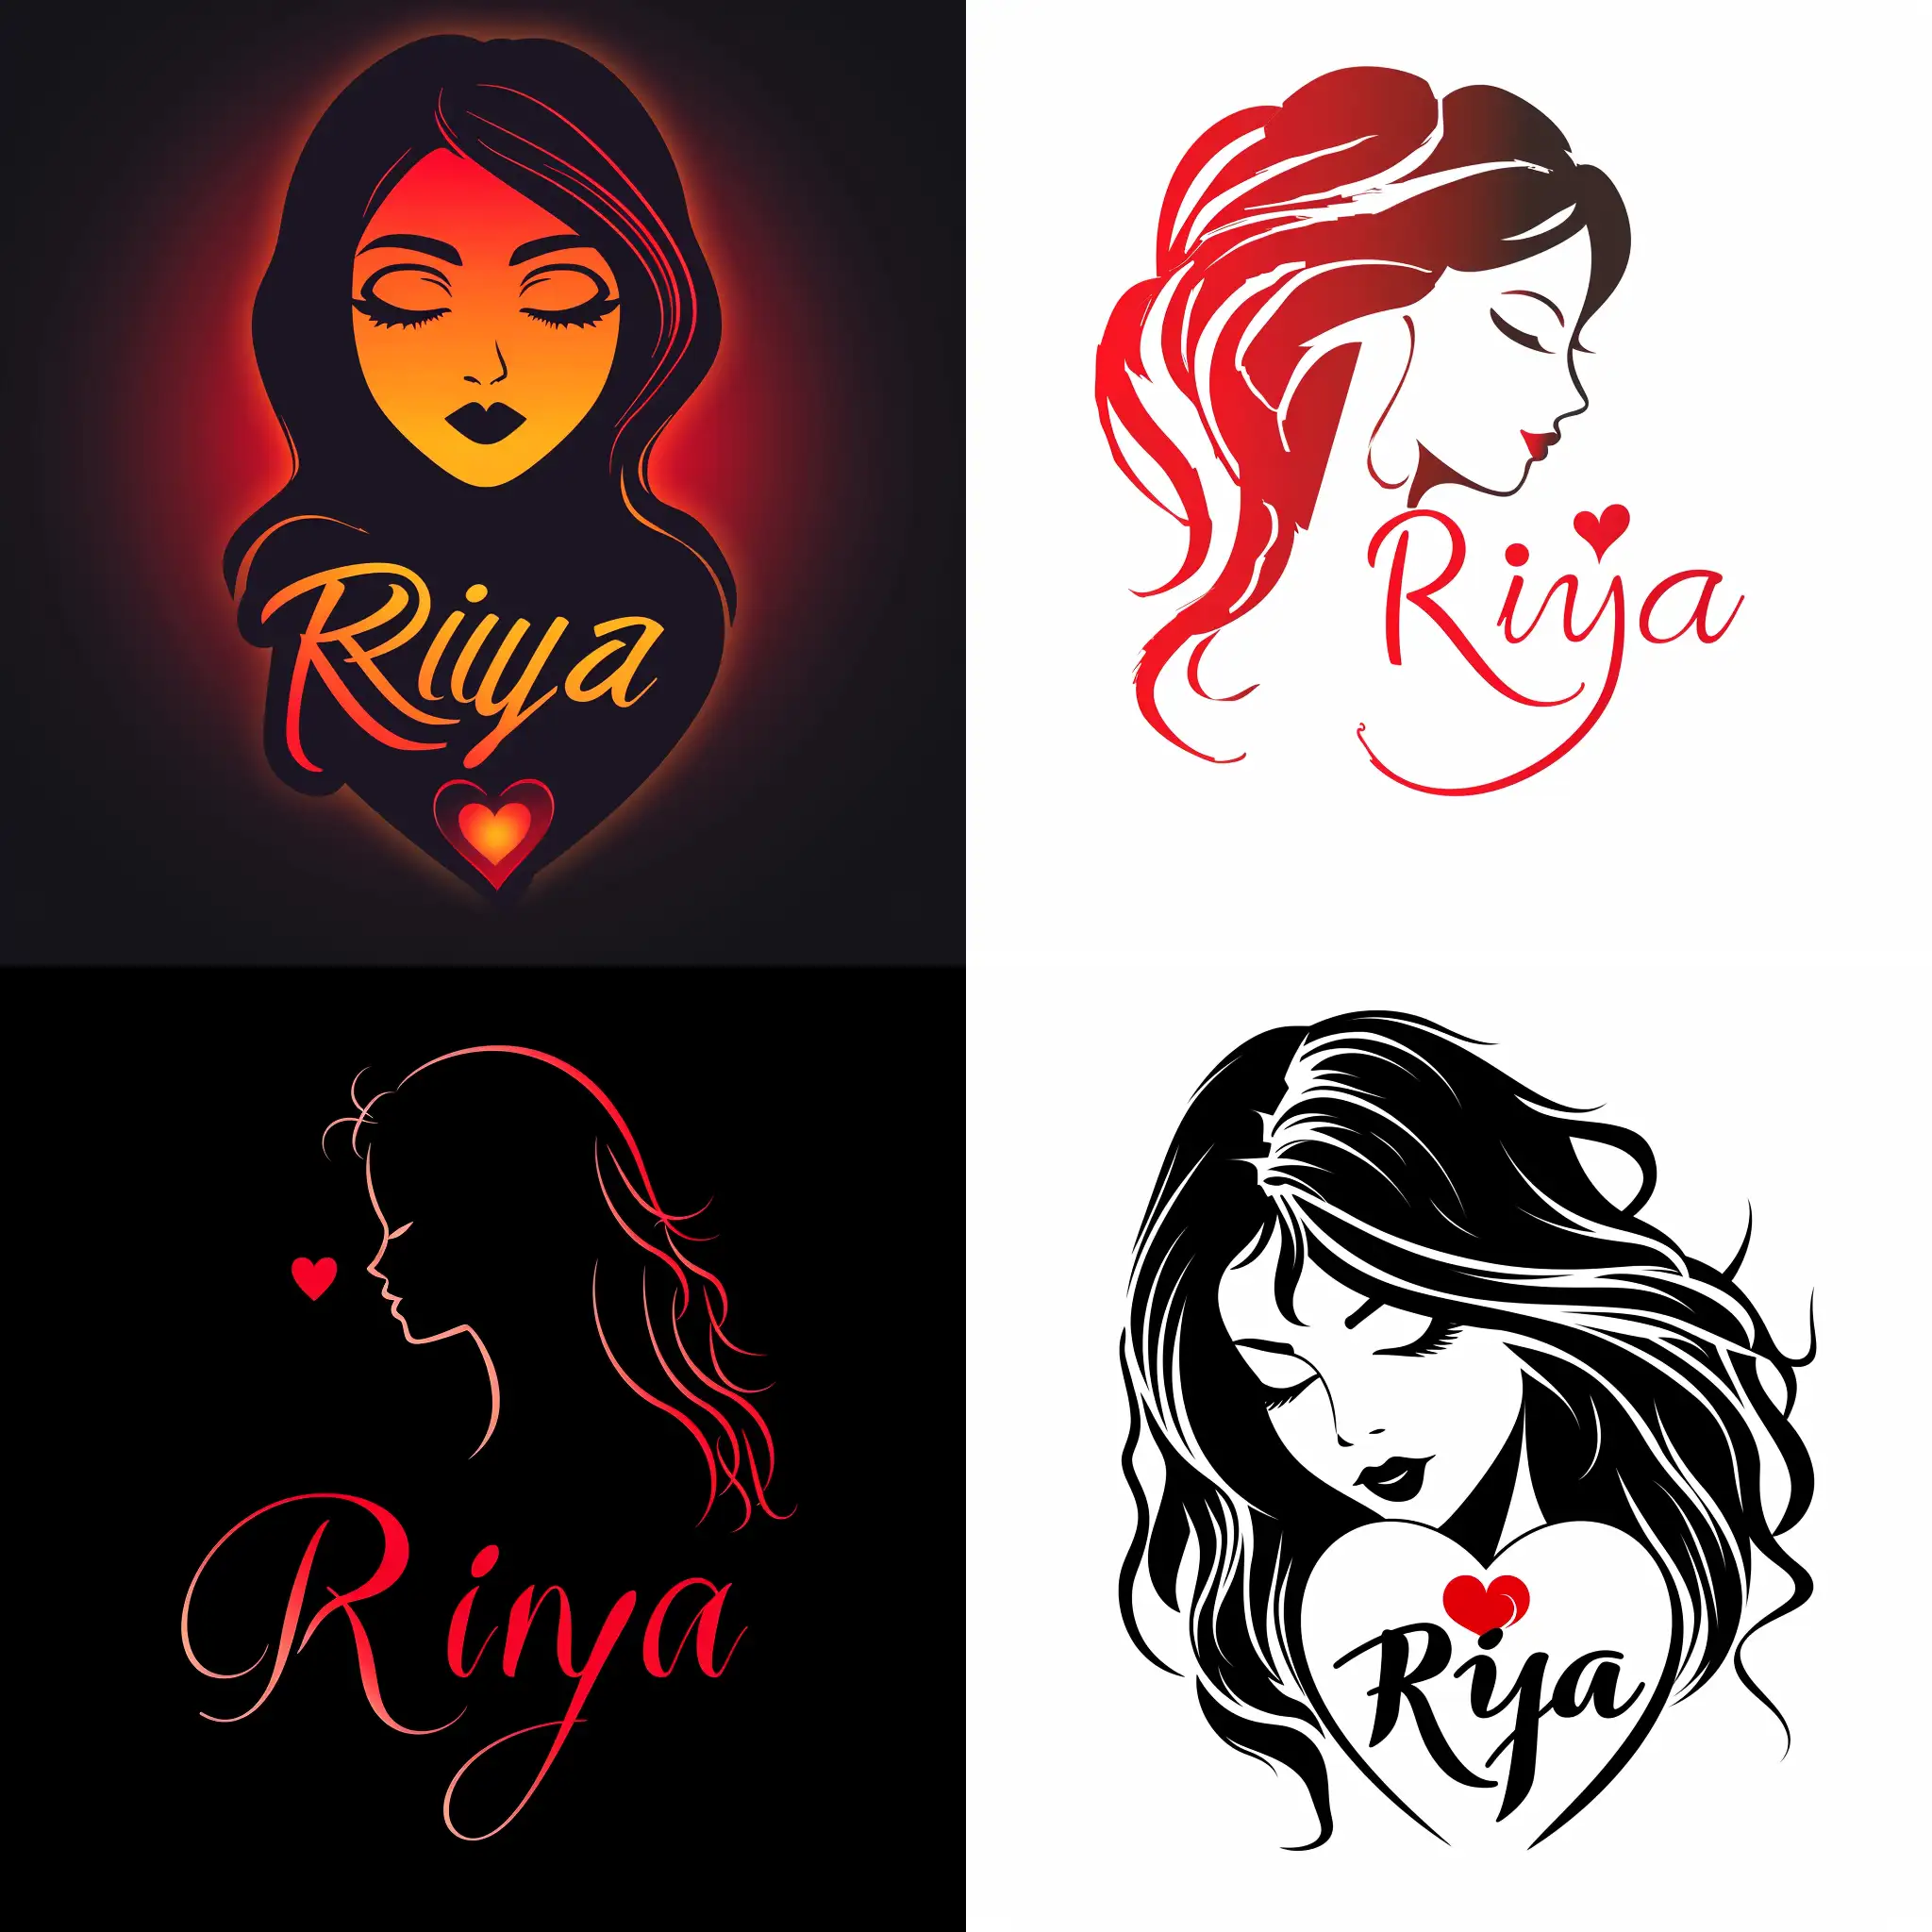 make a beautifull logo for name "  Riya " angle girl , added heart shape in logo